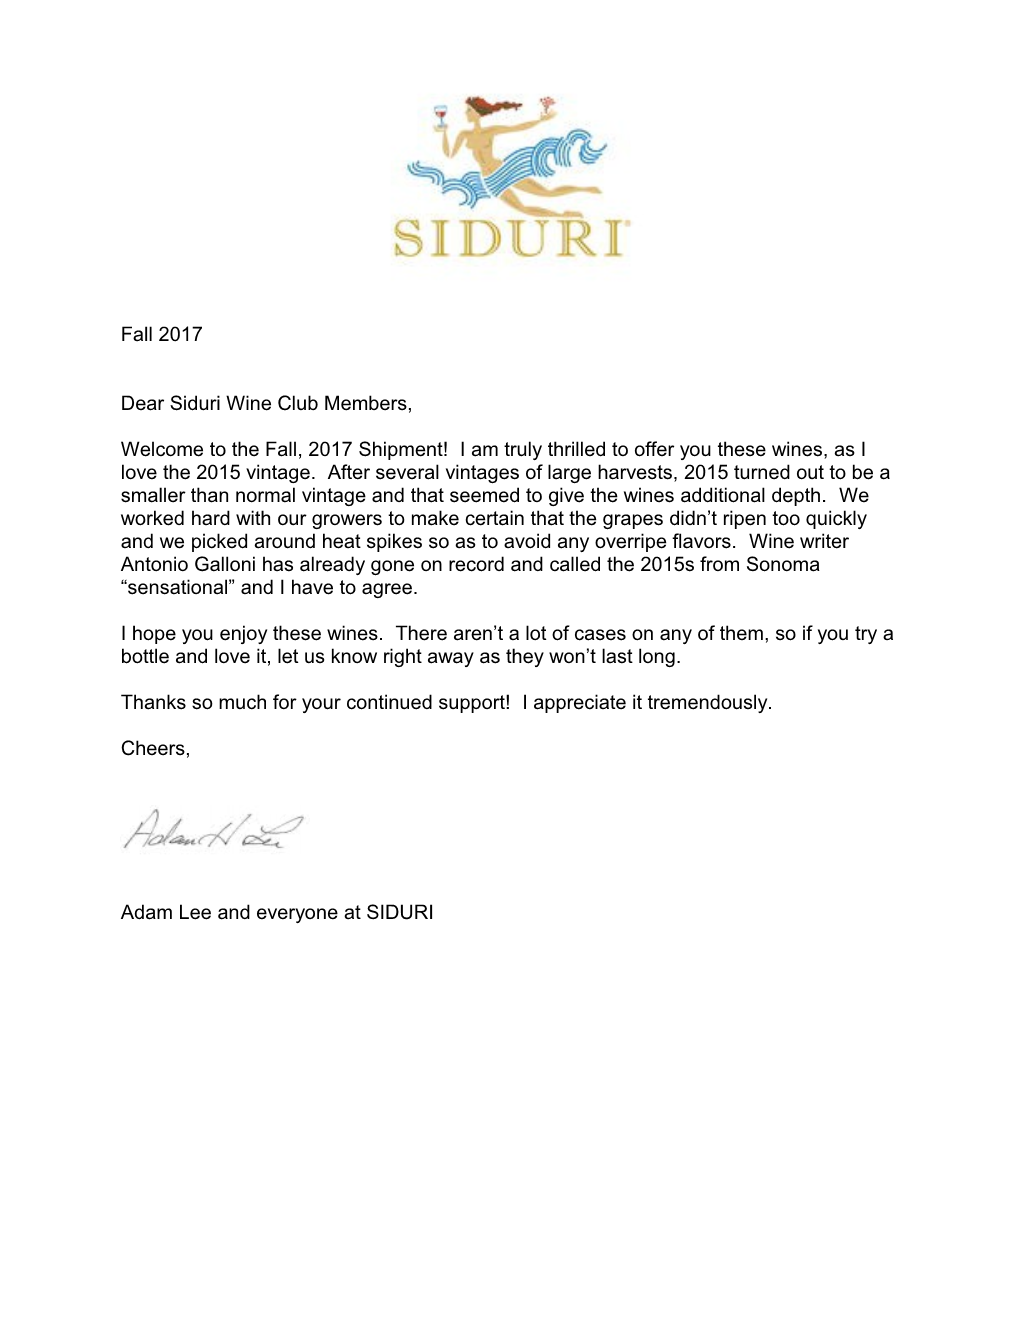 Dear Siduri Wine Club Members